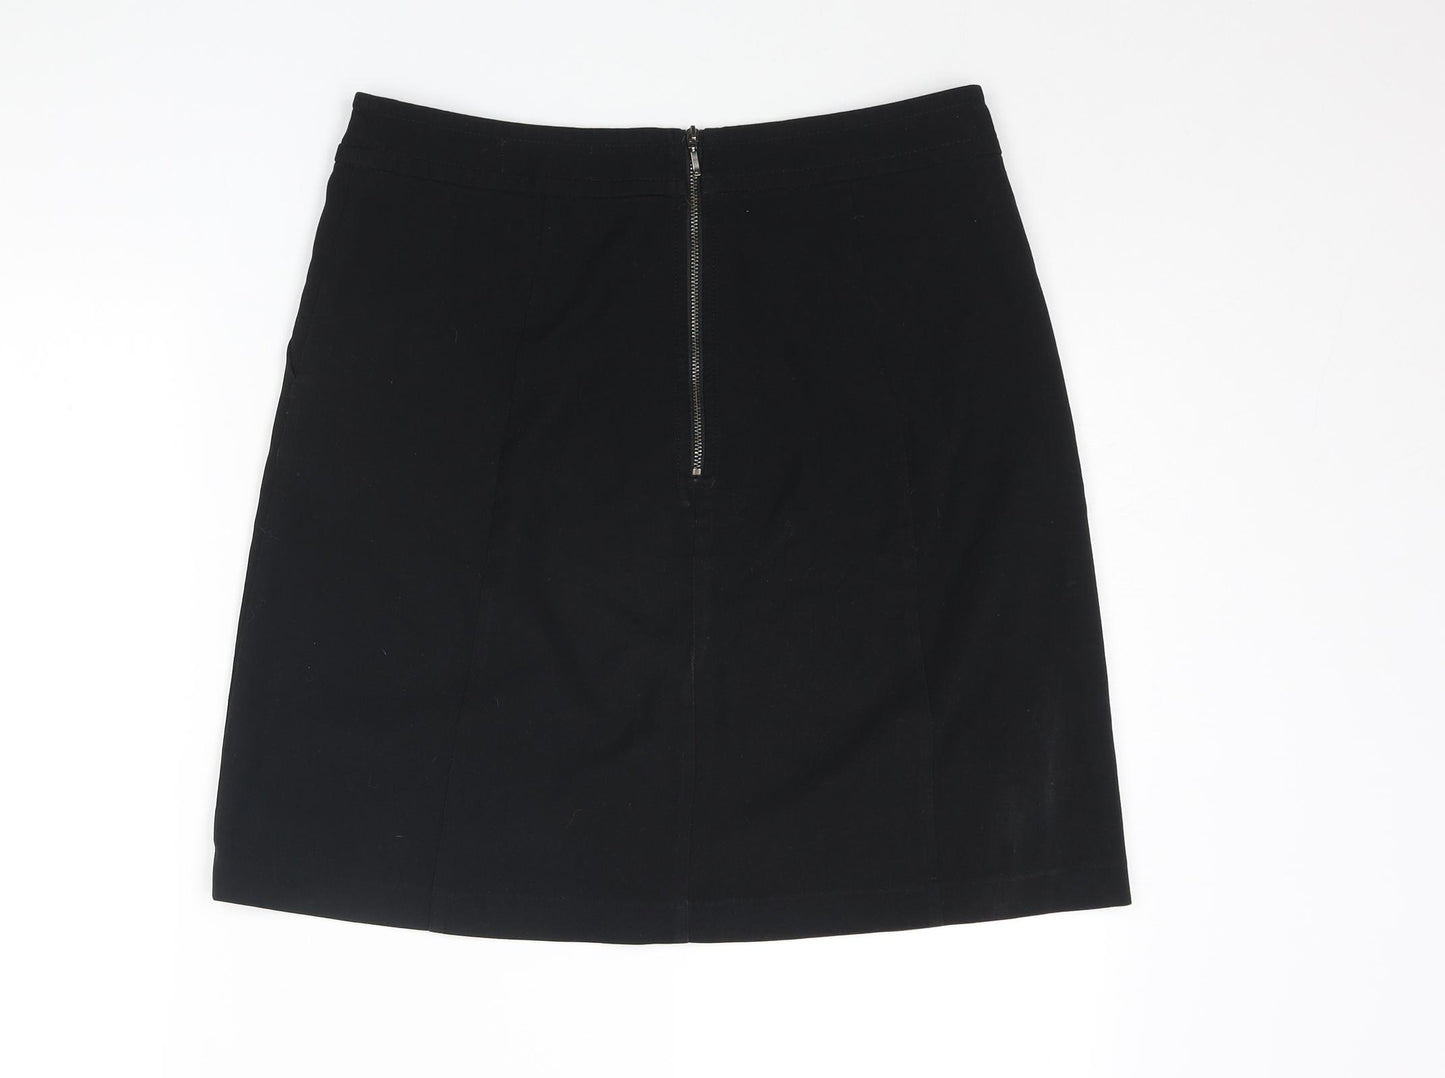 NEXT Womens Black Polyester A-Line Skirt Size 10 Zip